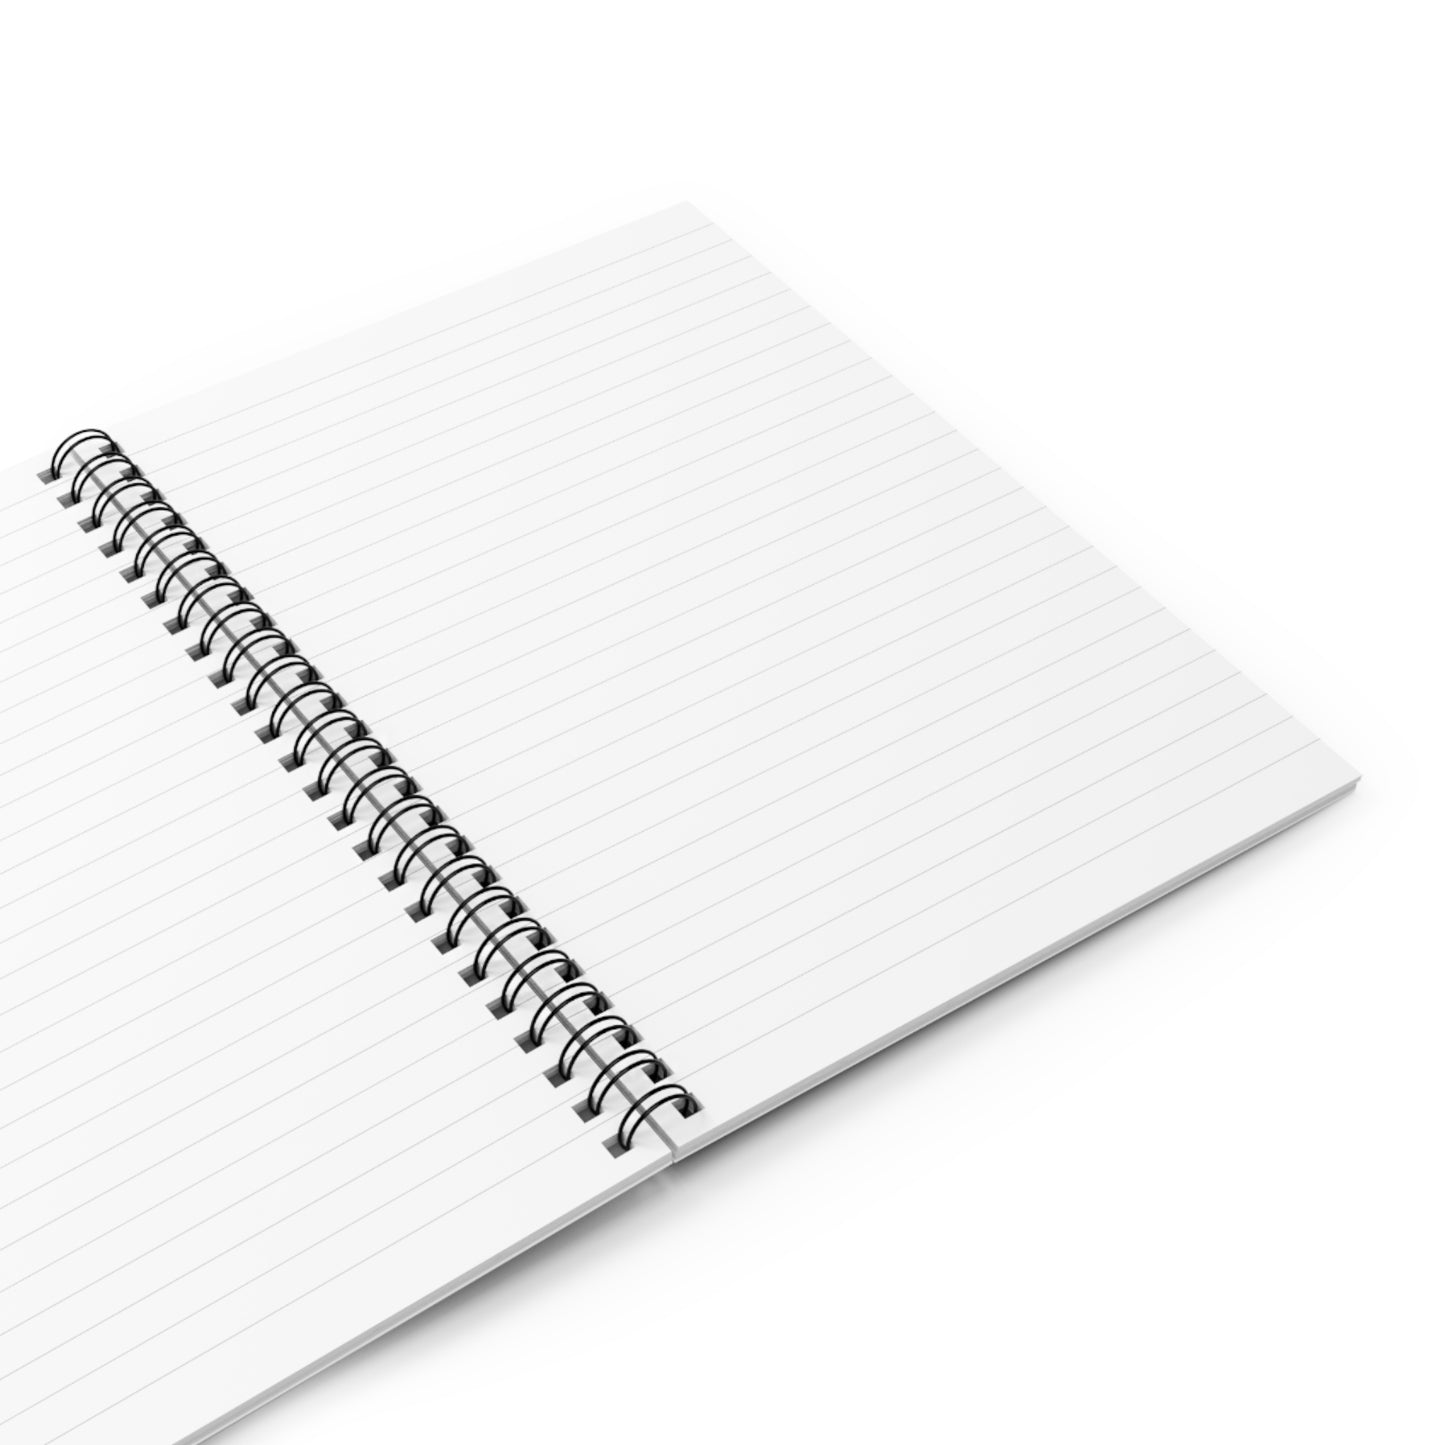 ROLLS ROYCE PHANTOM SPECTRE 2024 Jennifer Messina Signature Edition Spiral Ruled Journal Notebook